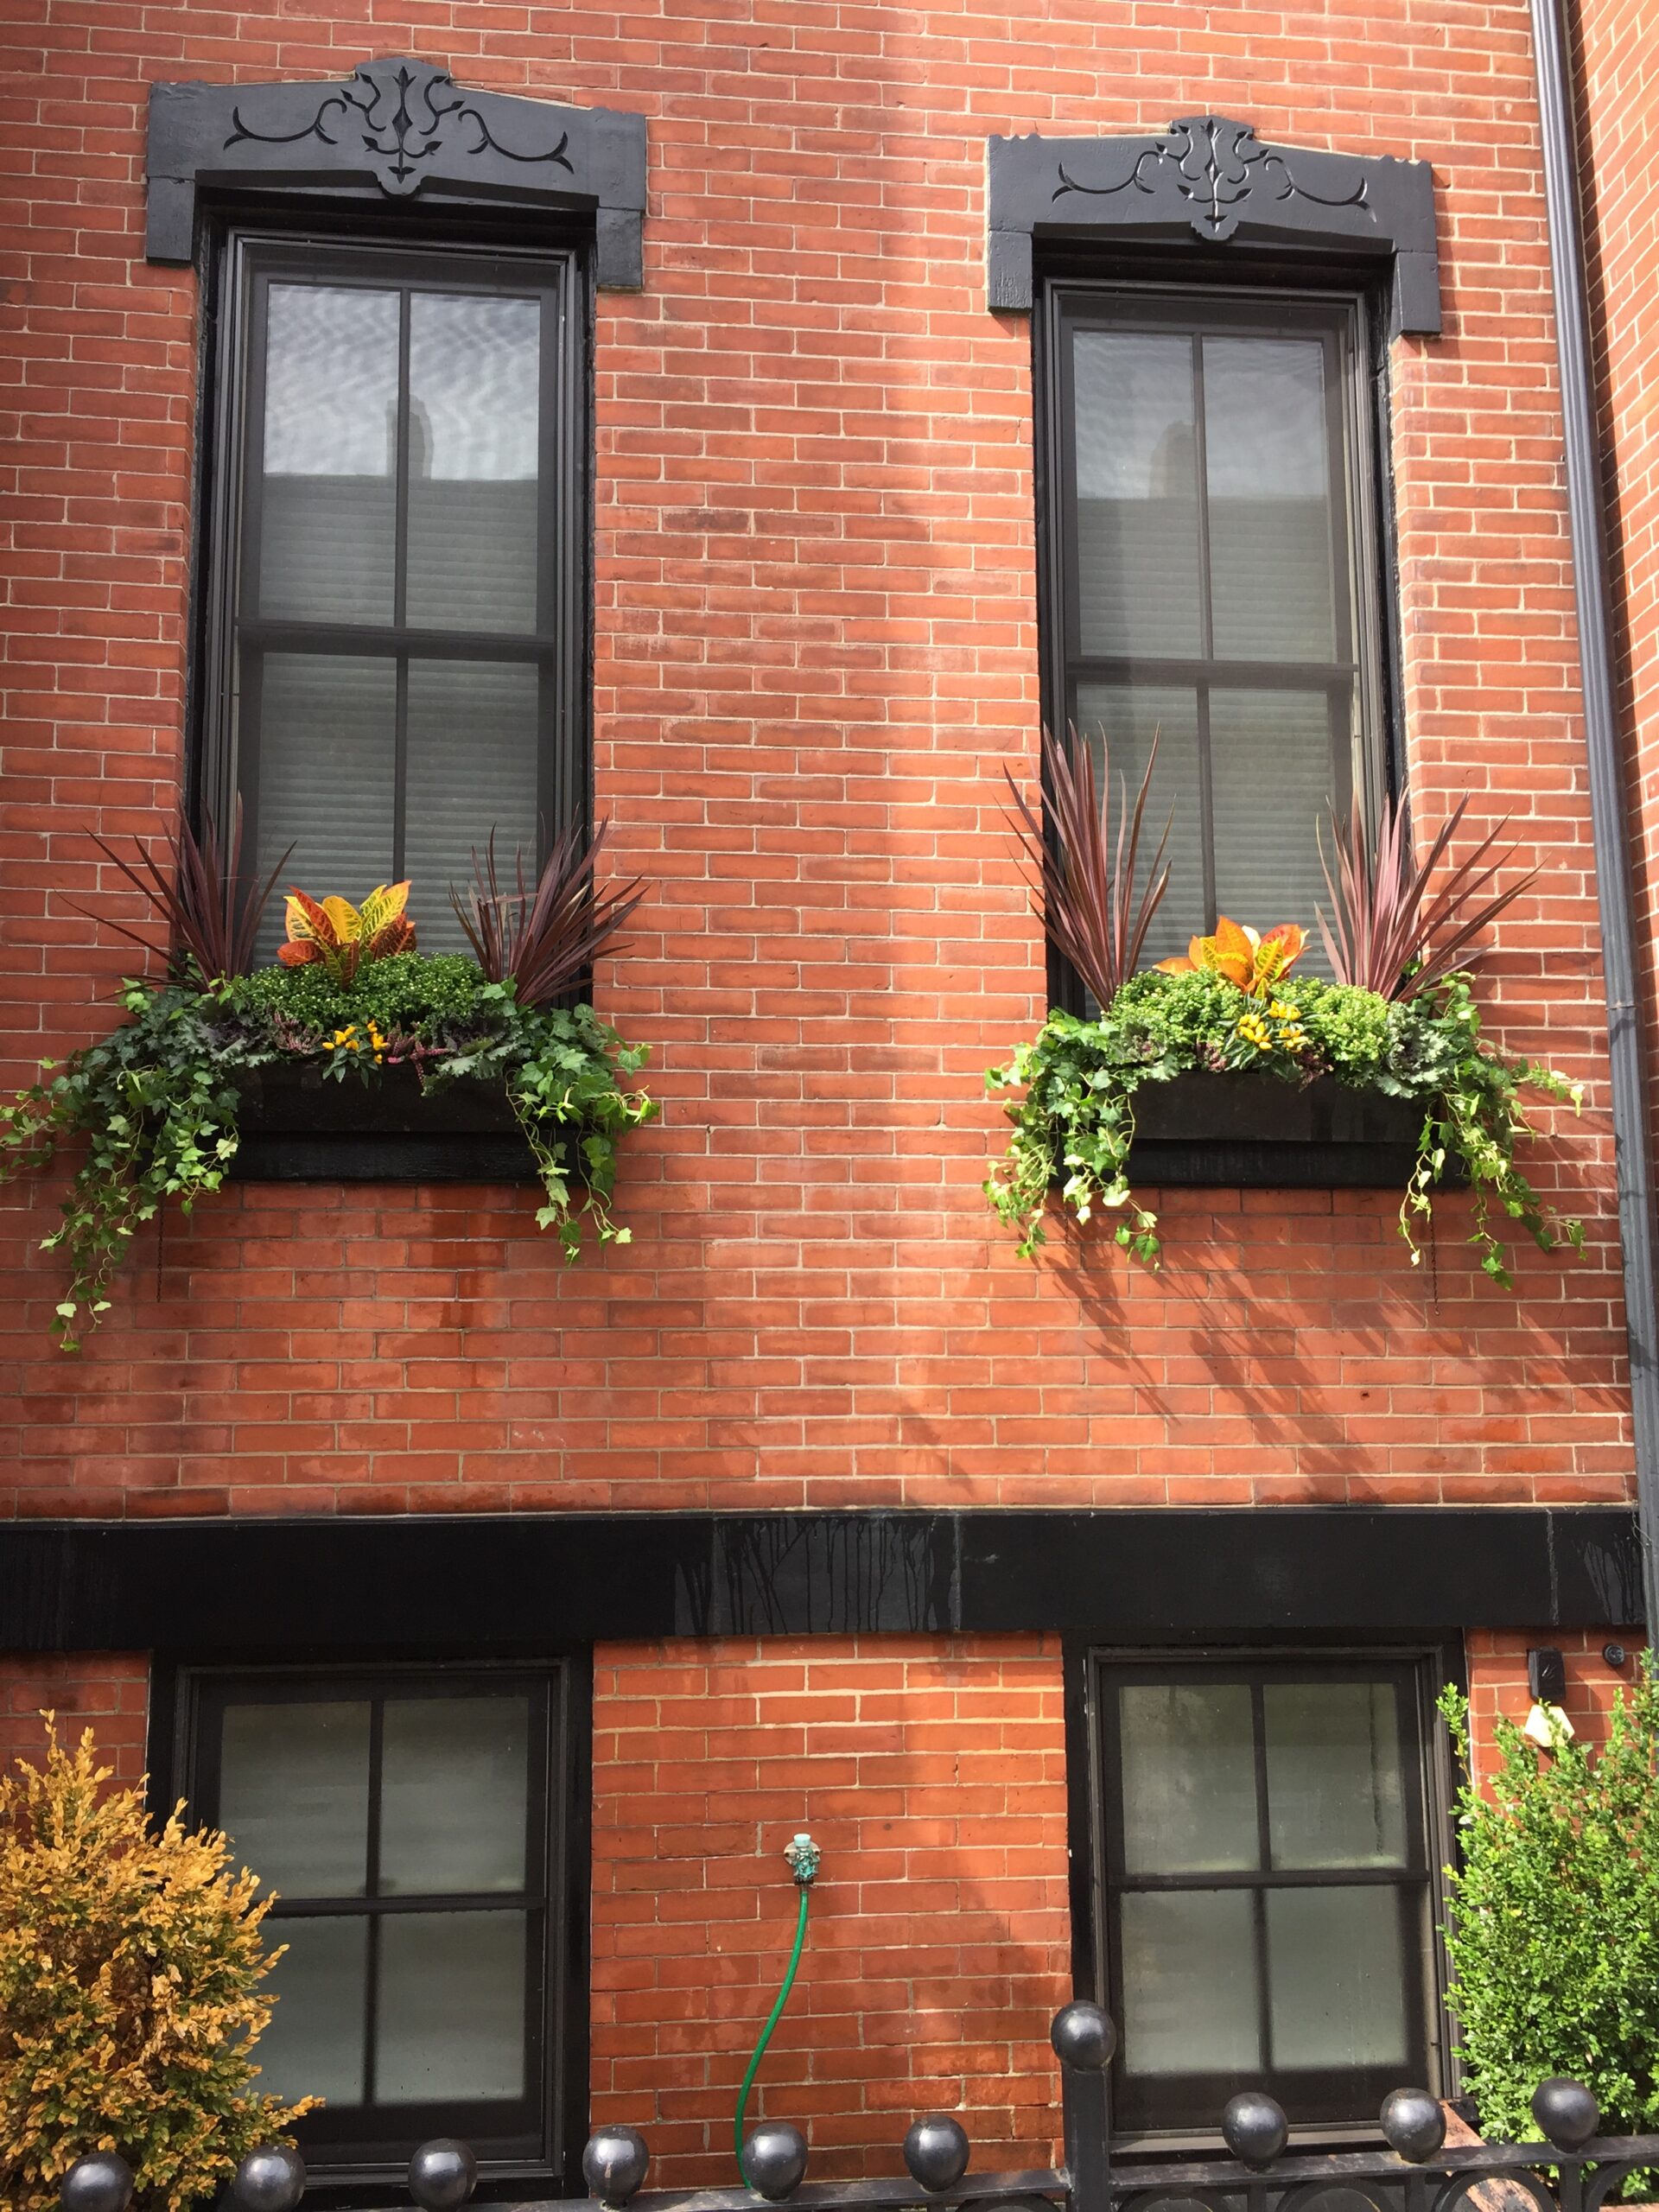 South Boston Residential Window Boxes